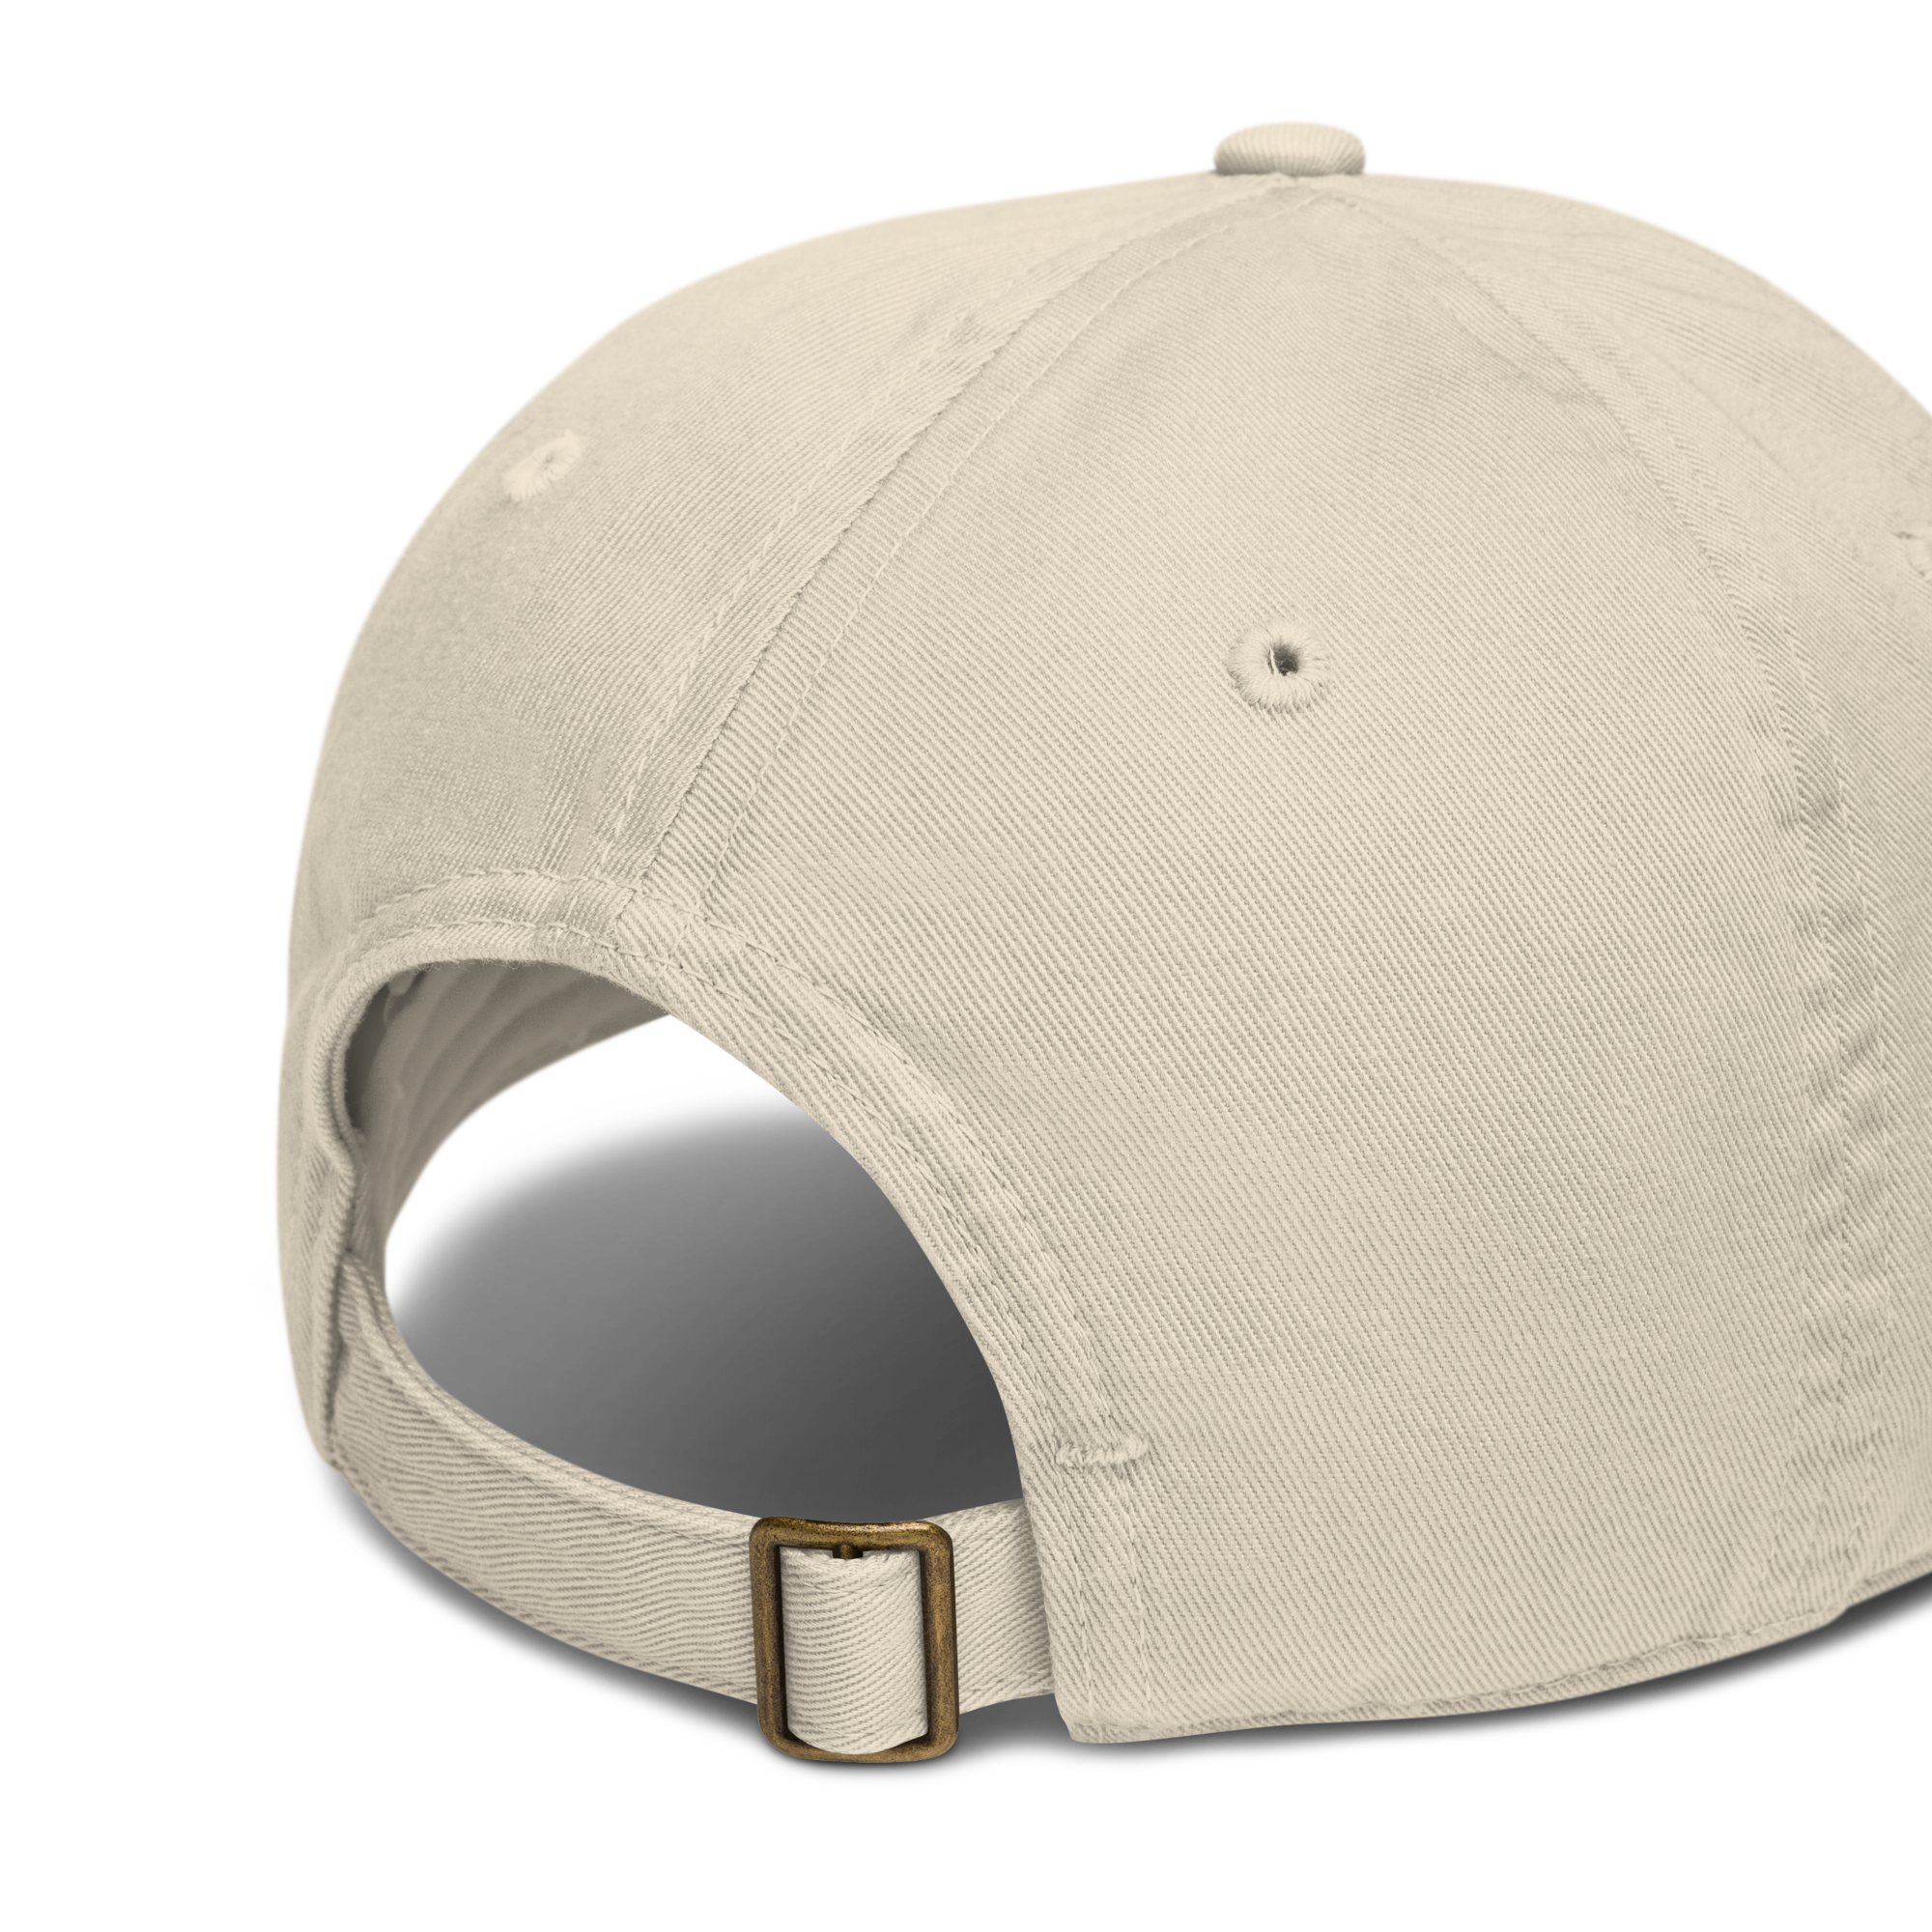 Image of baseball hat